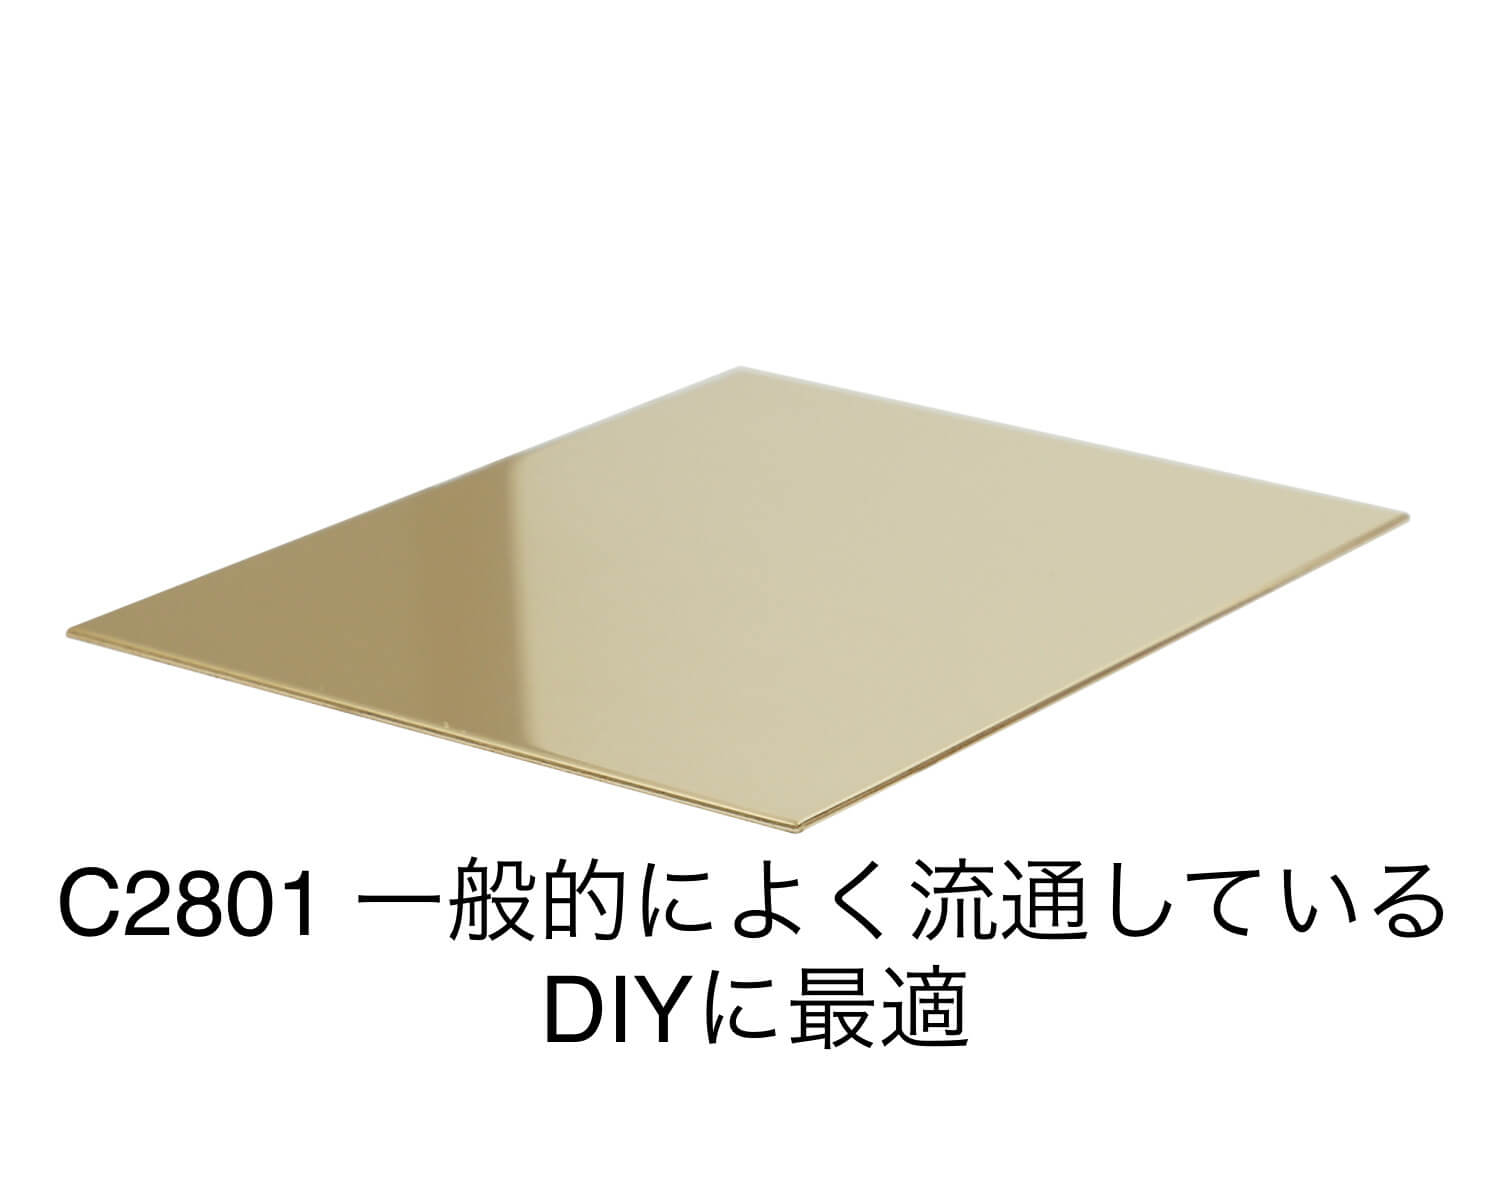 材料、資材 単品購入可 TETSUKO 真鍮板(黄銅3種) C2801P t0.5mm W400×L900mm B08BNFVQMM  6OkMW5g2MR - vinicolasantaelena.com